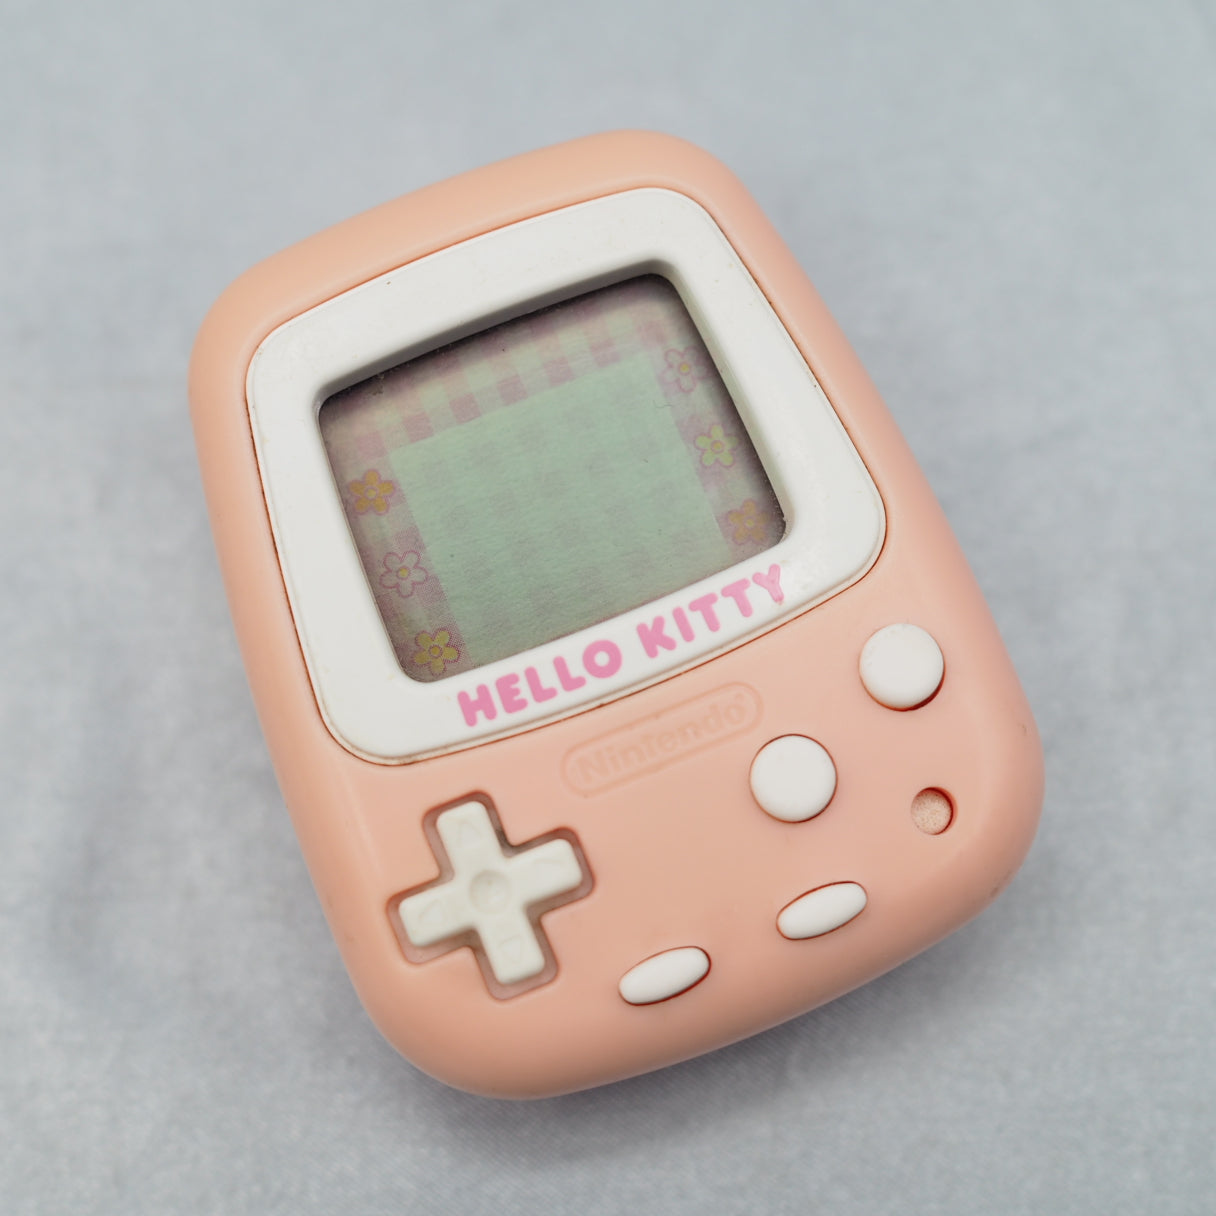 [JUNK] Nintendo Pocket Hello Kitty Console